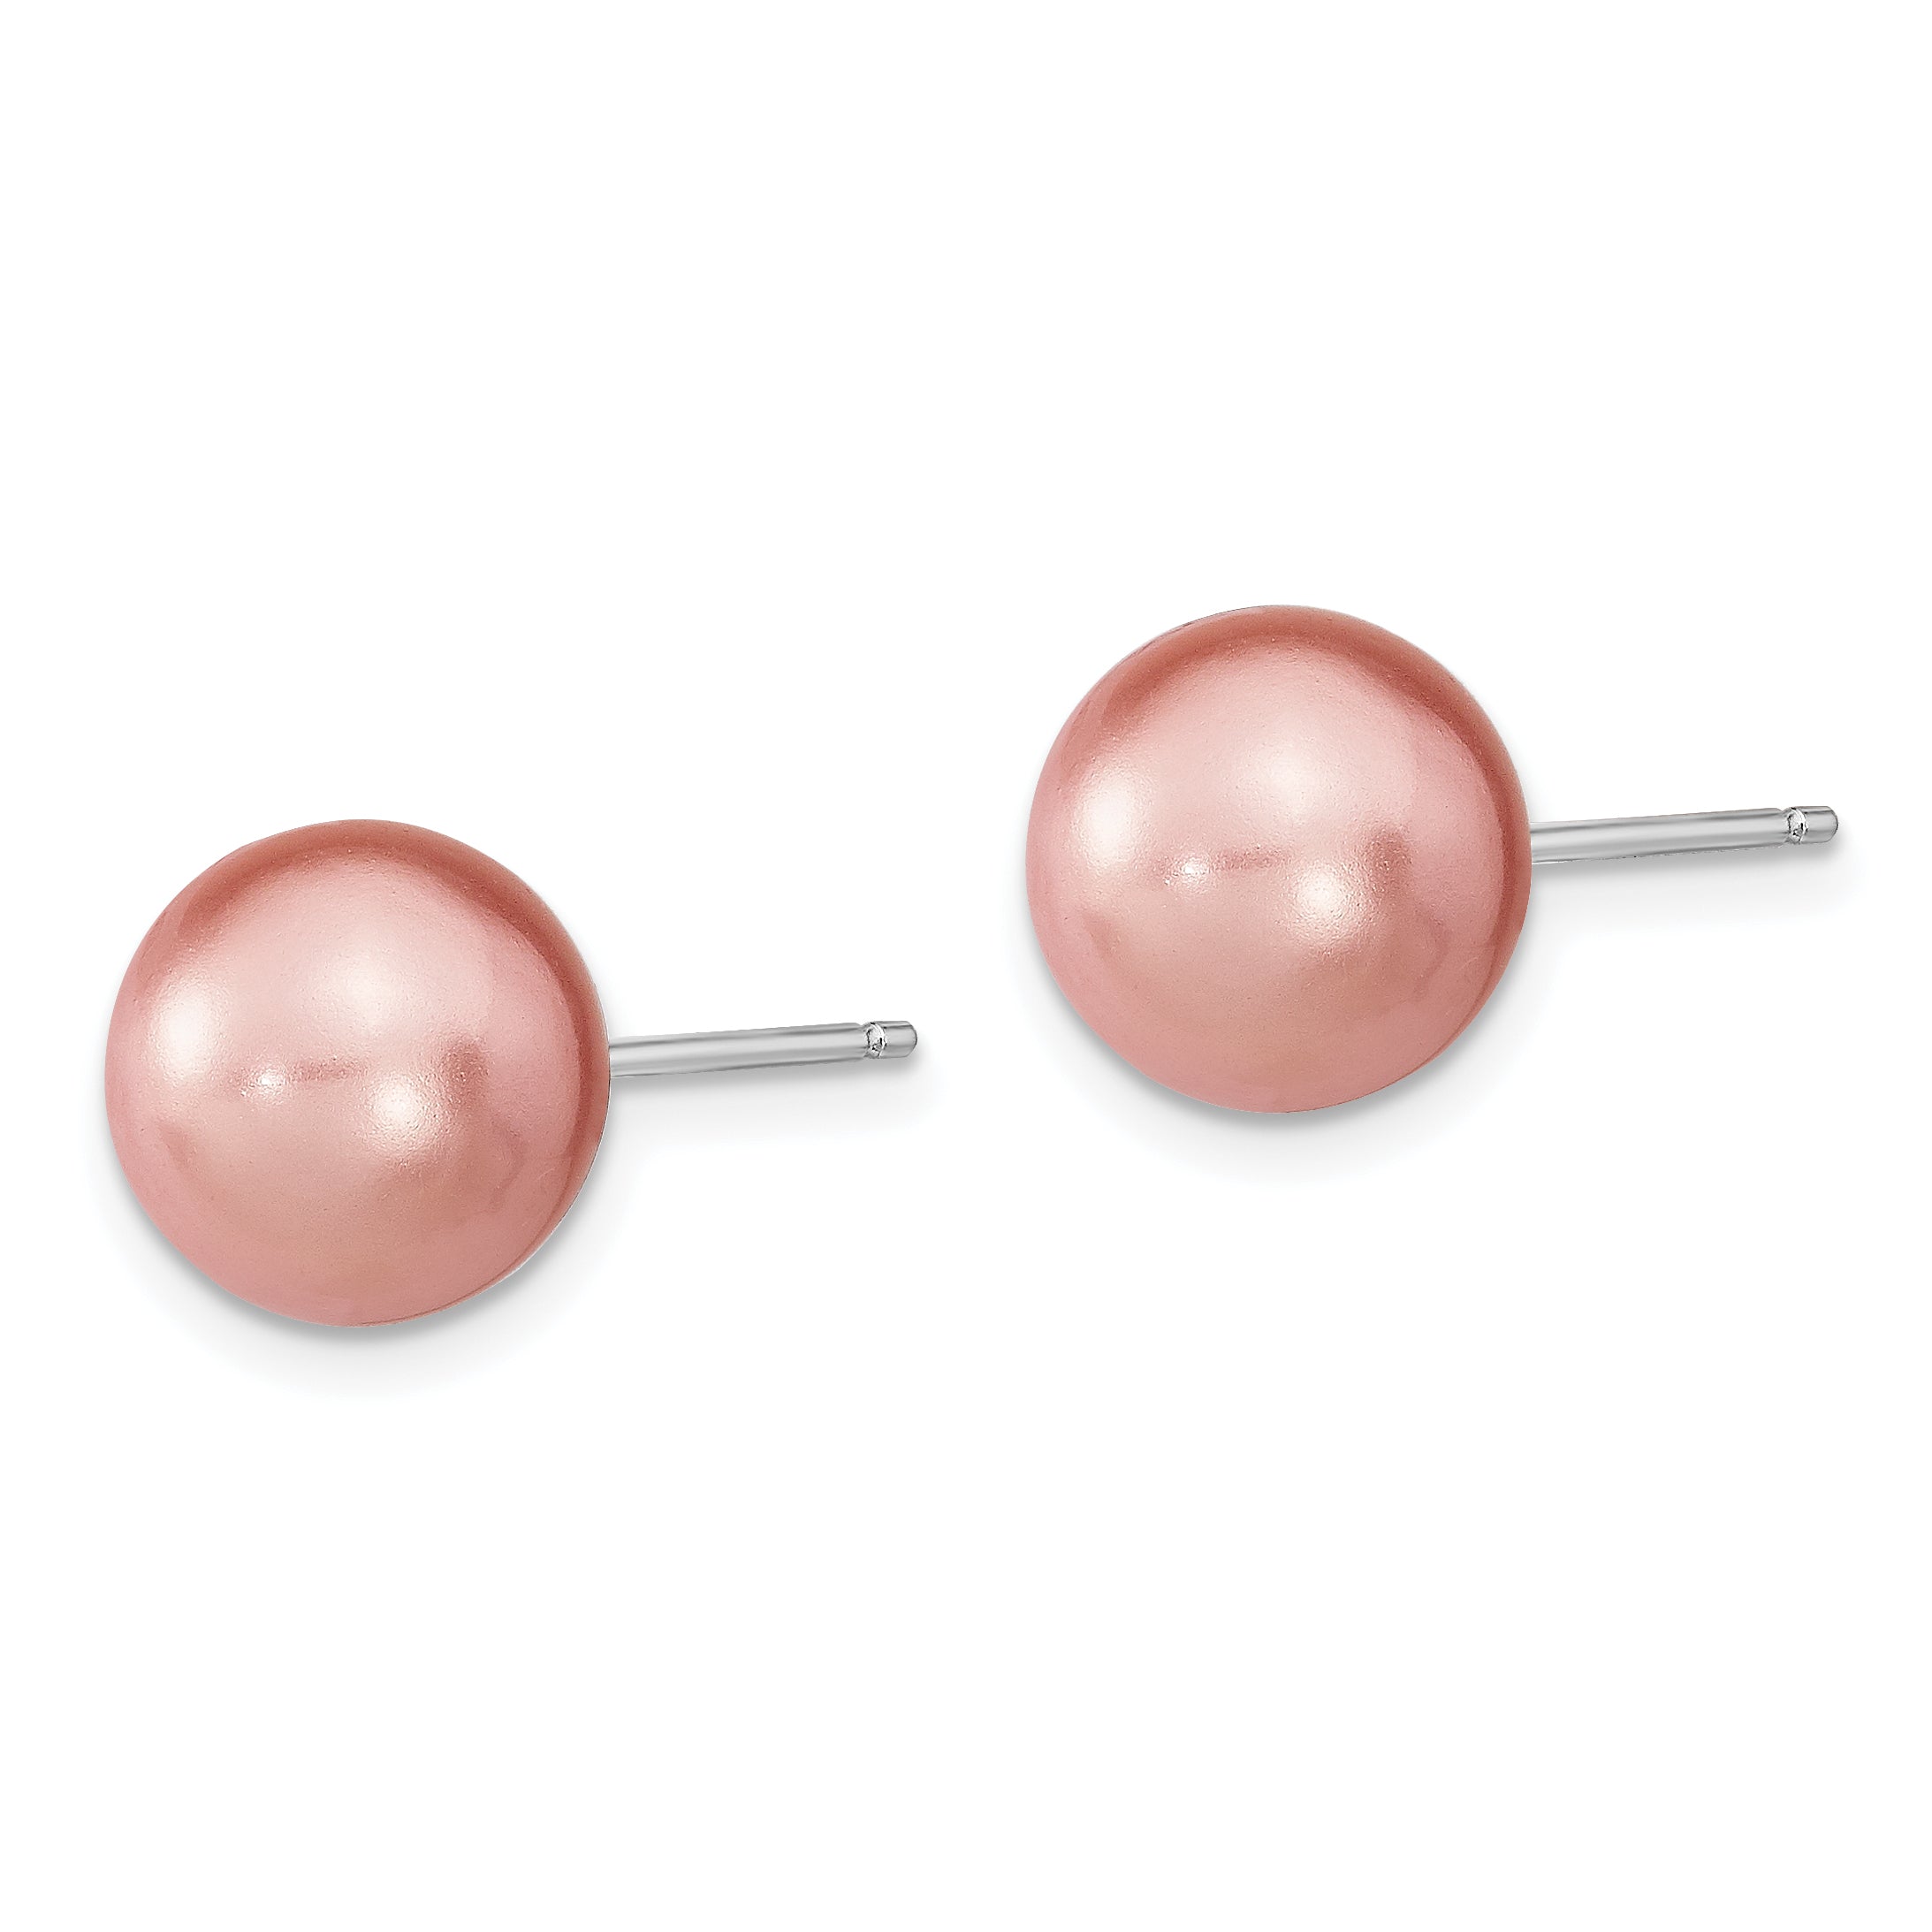 Sterling Silver RH 10-11mm Wht/Pink/Blk Imit. Shell Pearl Earring Set